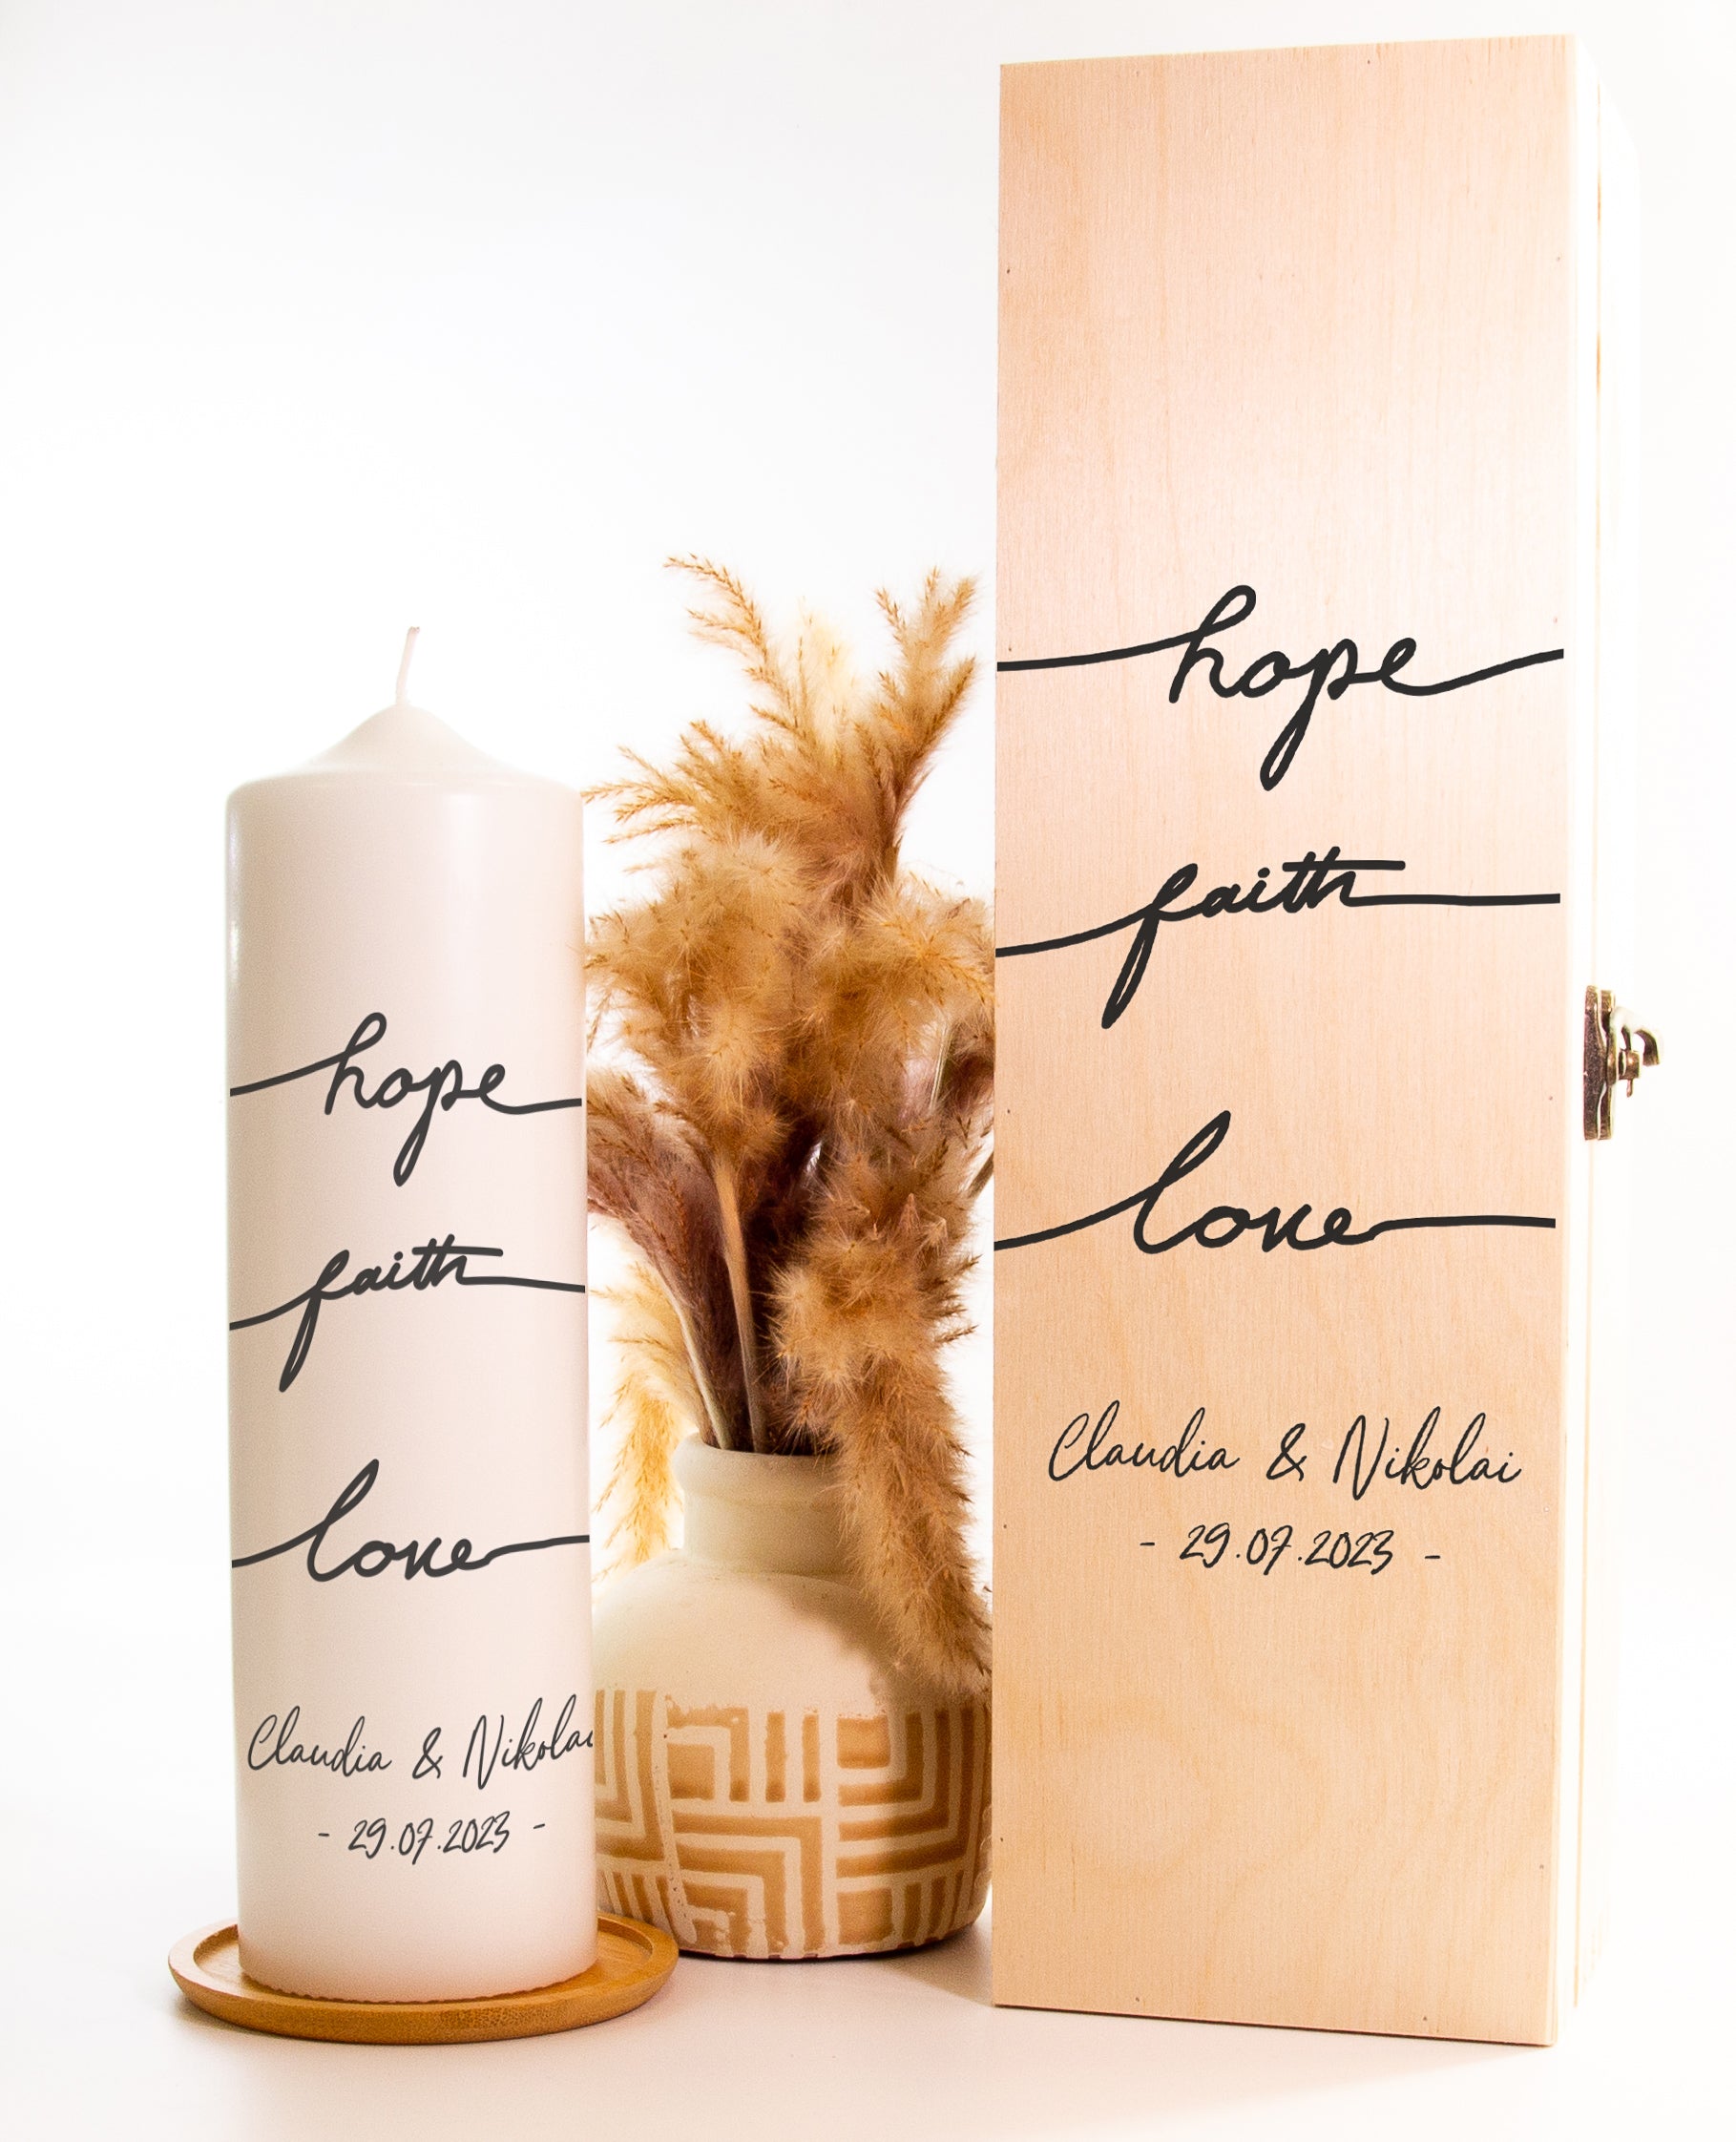 Hochzeitskerze "Hope Faith Love" - mit Namen & Datum personalisiert